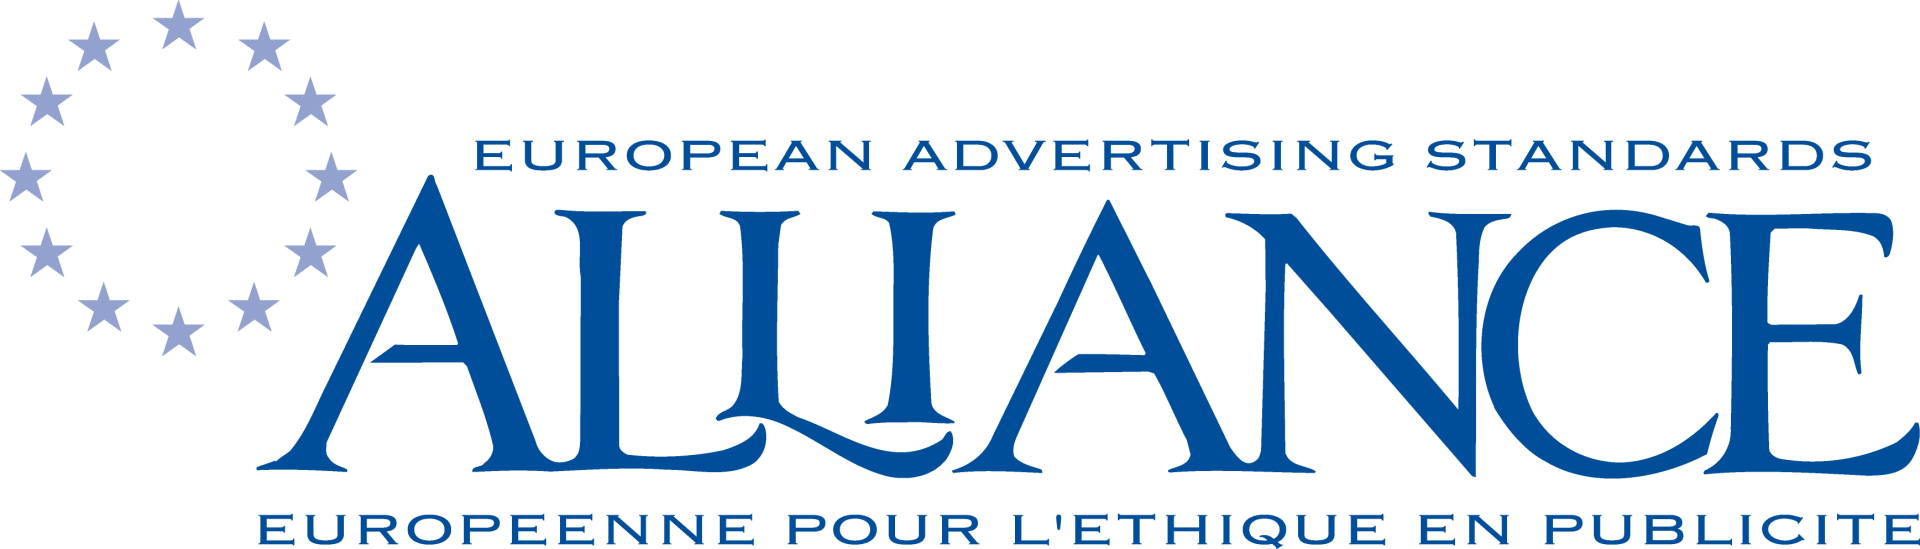 EASA Logo - EASA logo - EACA